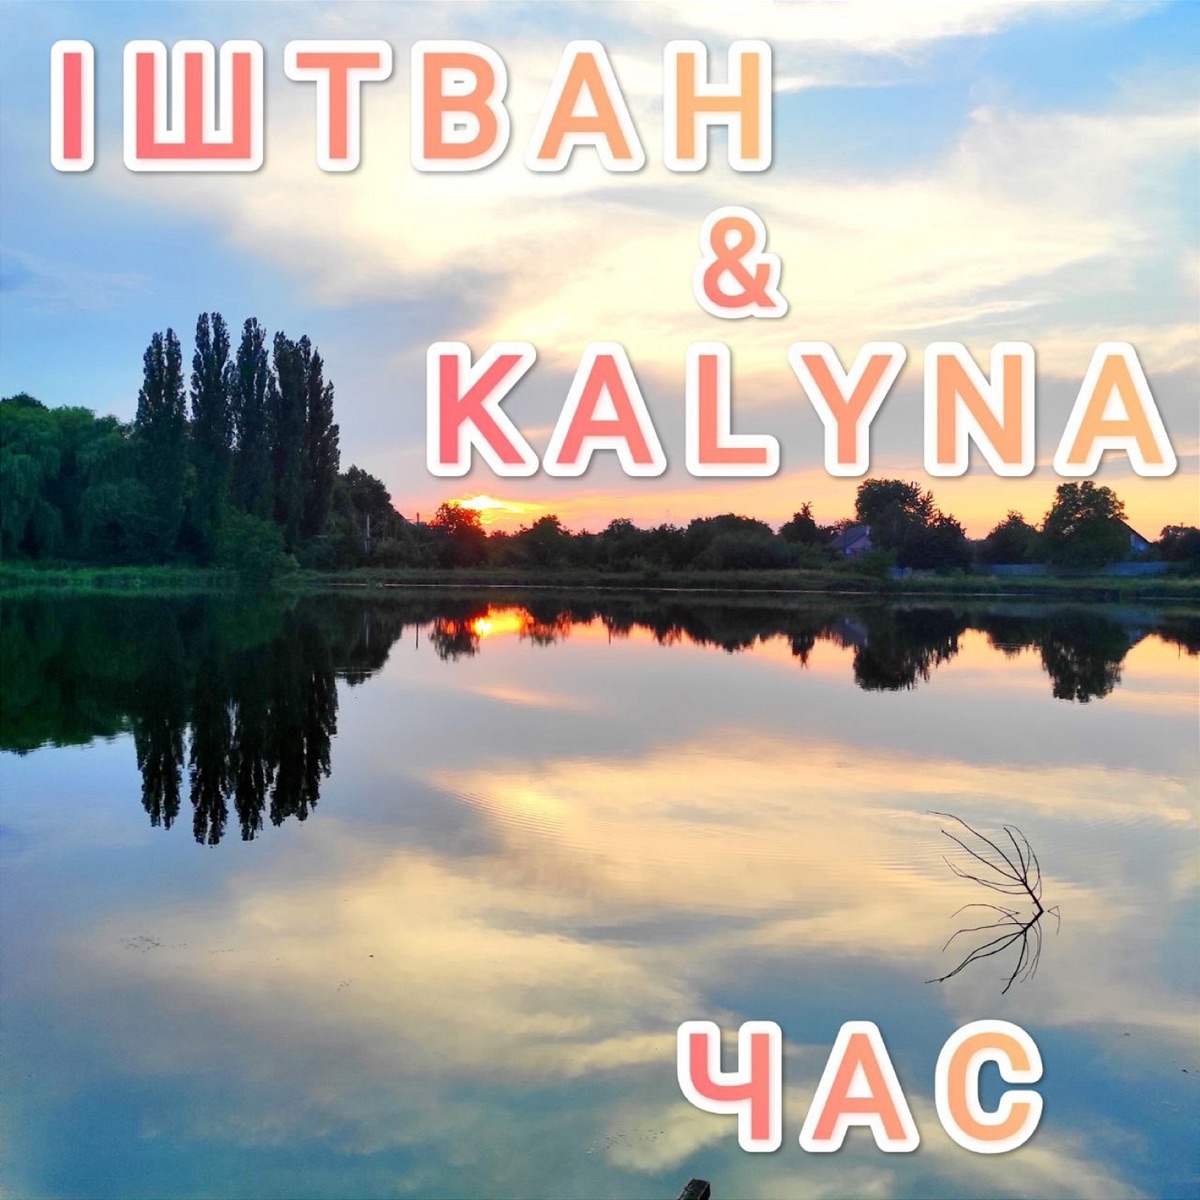 Znane Ukrainskie Melodie (Famous Ukrainian Melodies) - Album by Kalyna -  Apple Music